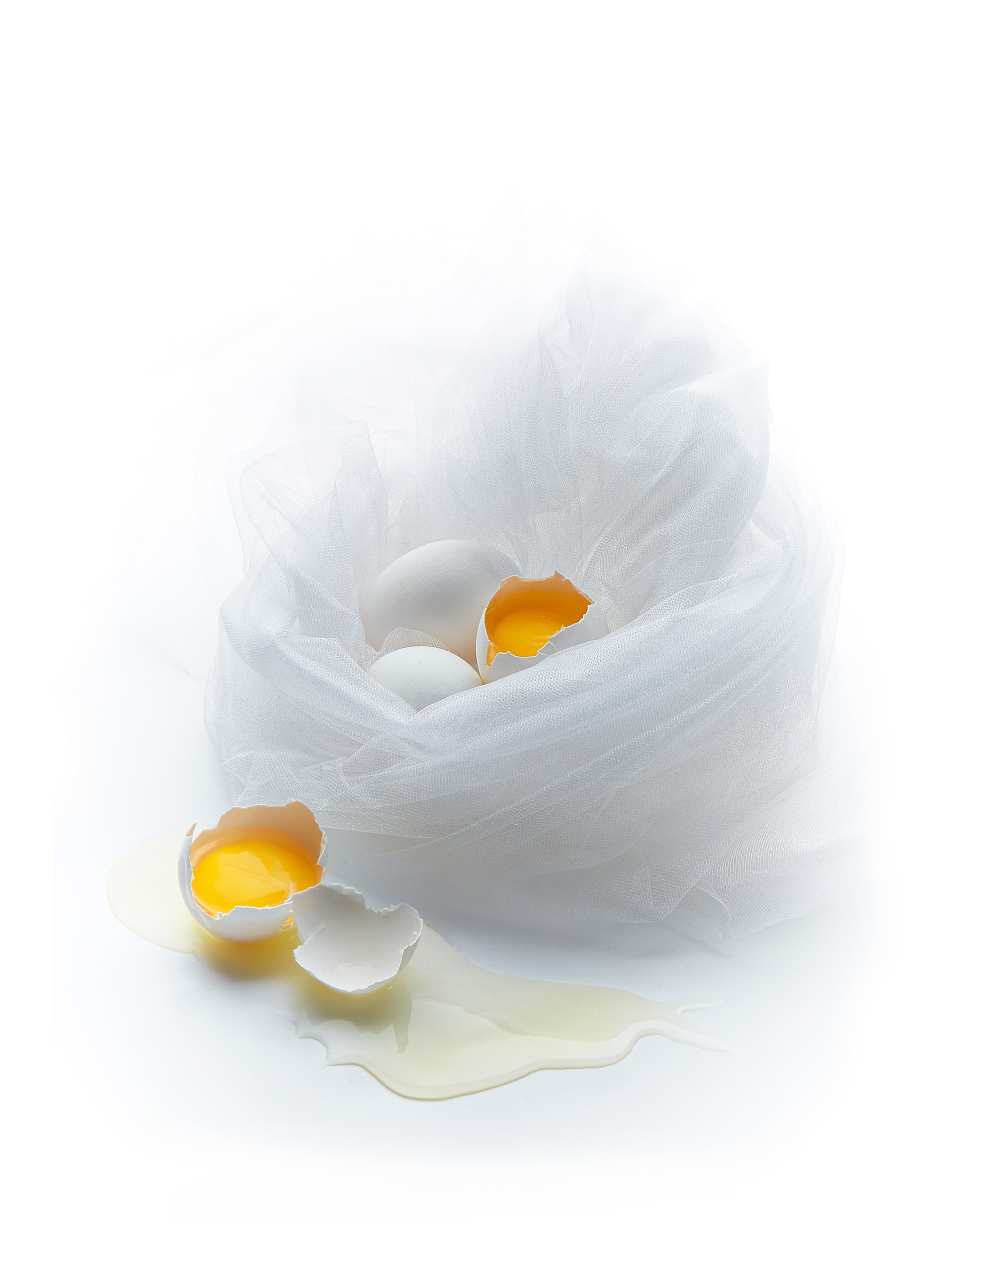 Eggs de Dmitriy Batenko